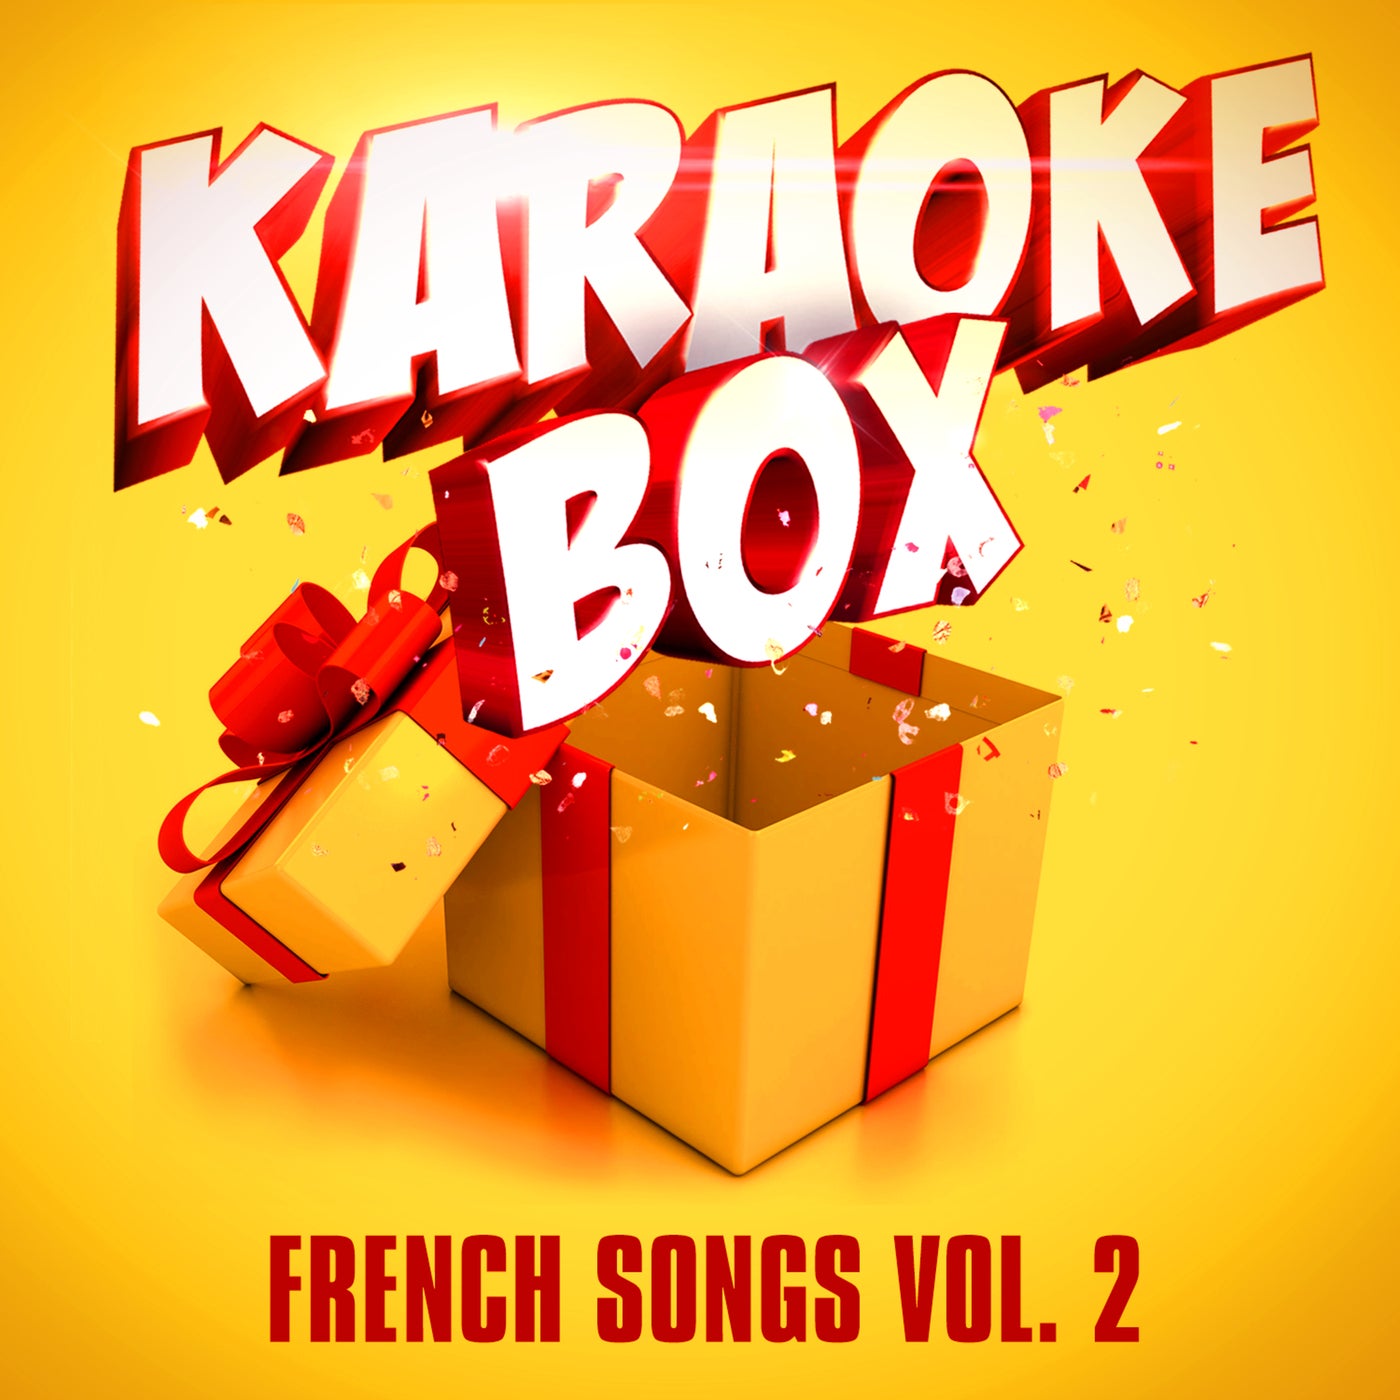 Karaoke Box: Classic French Songs, Vol. 2 by Karaoke Box on Beatsource